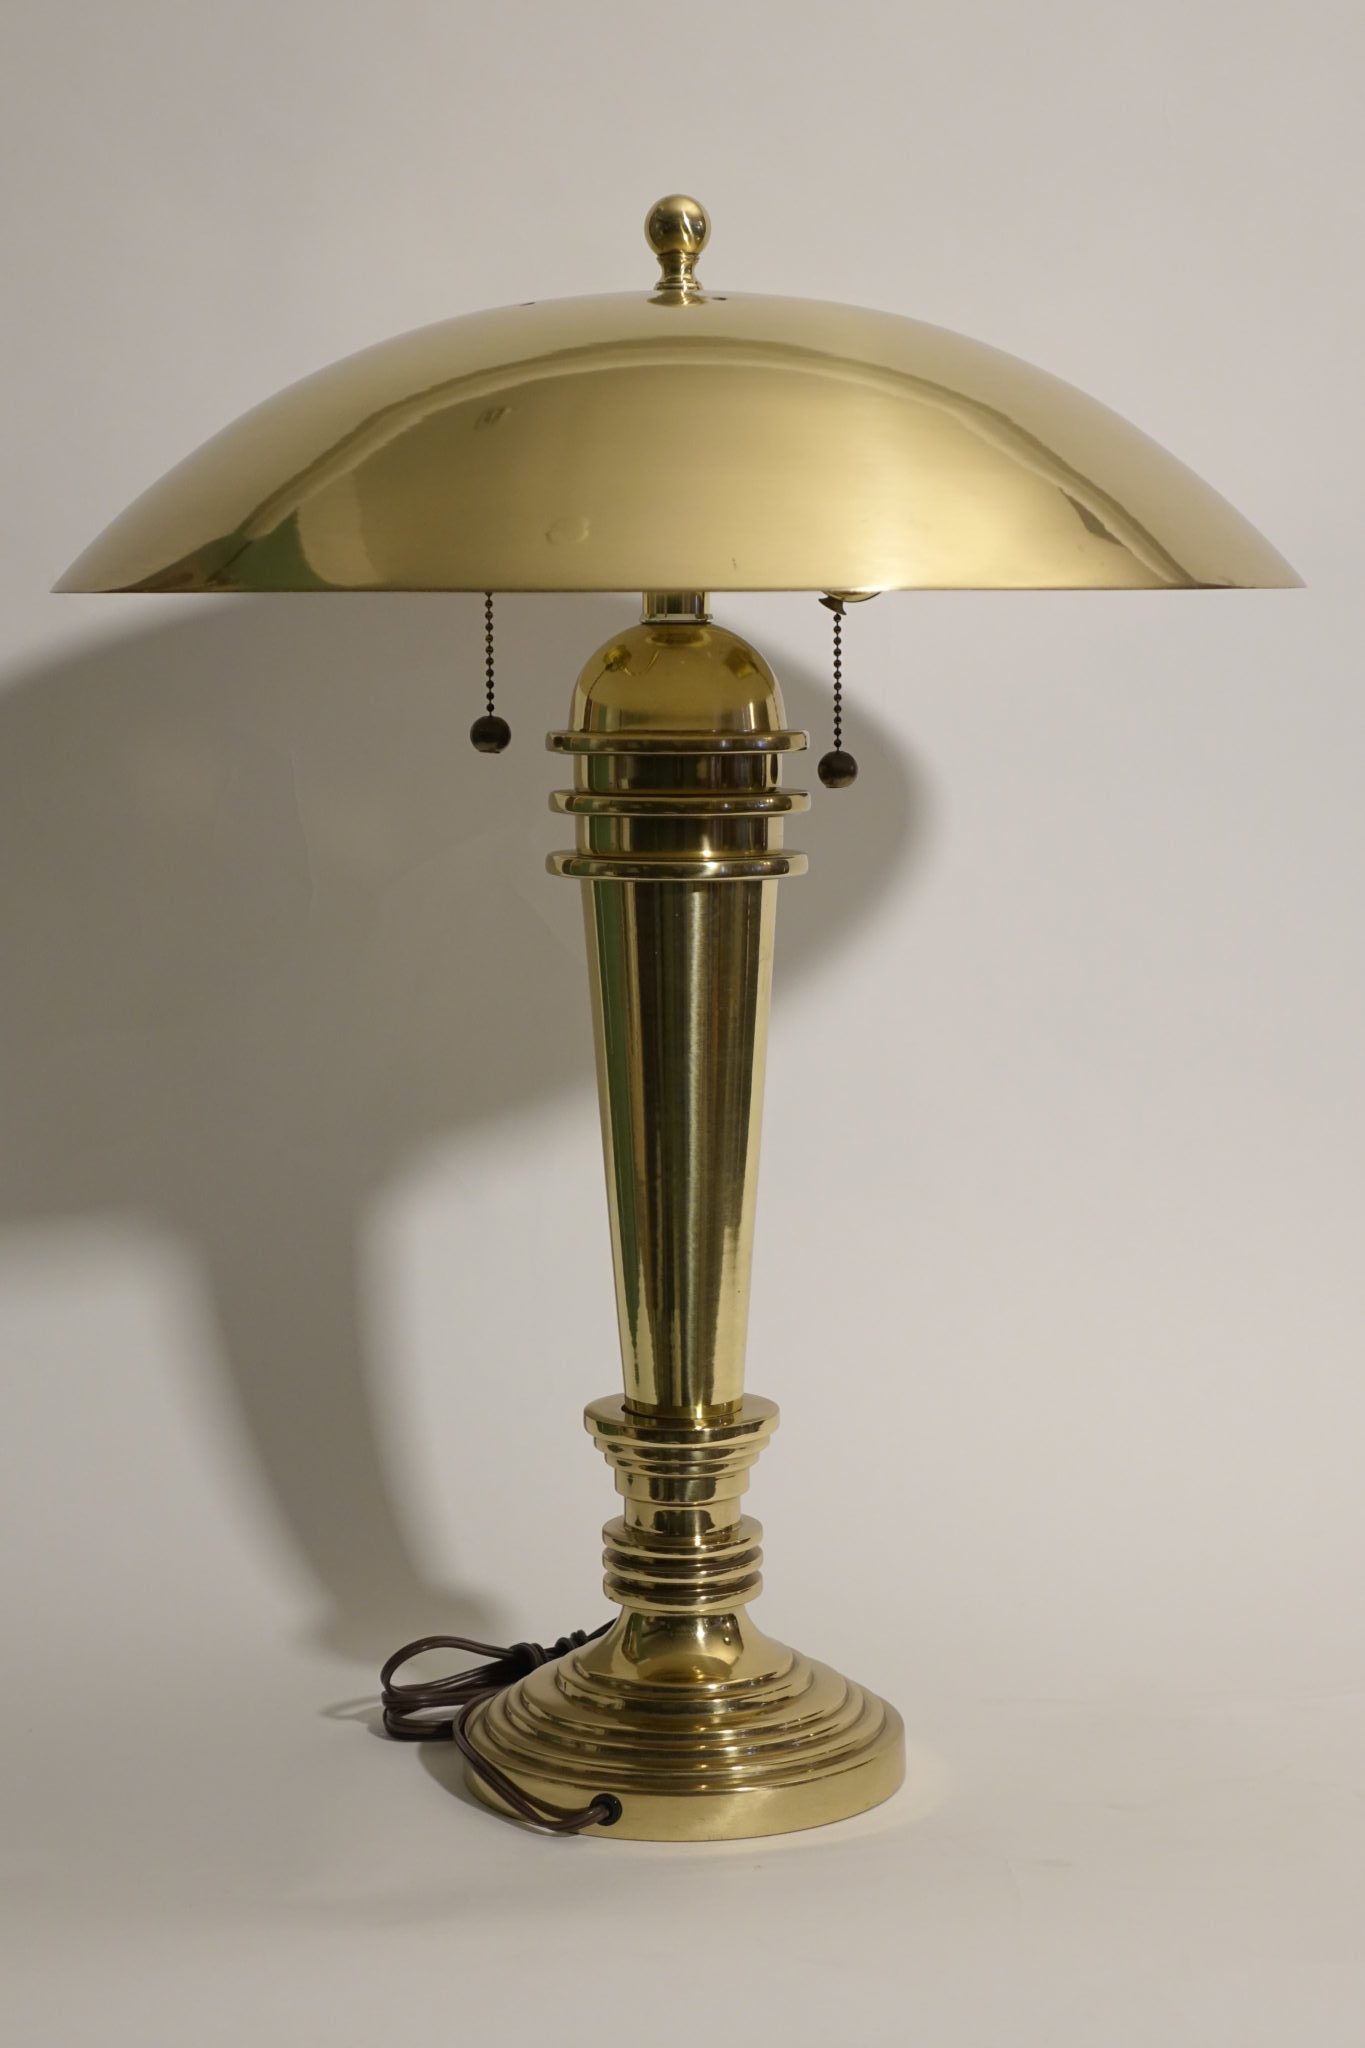 Sold - Brass Table Lamp - 9567 - Rubbish Interiors Inc.